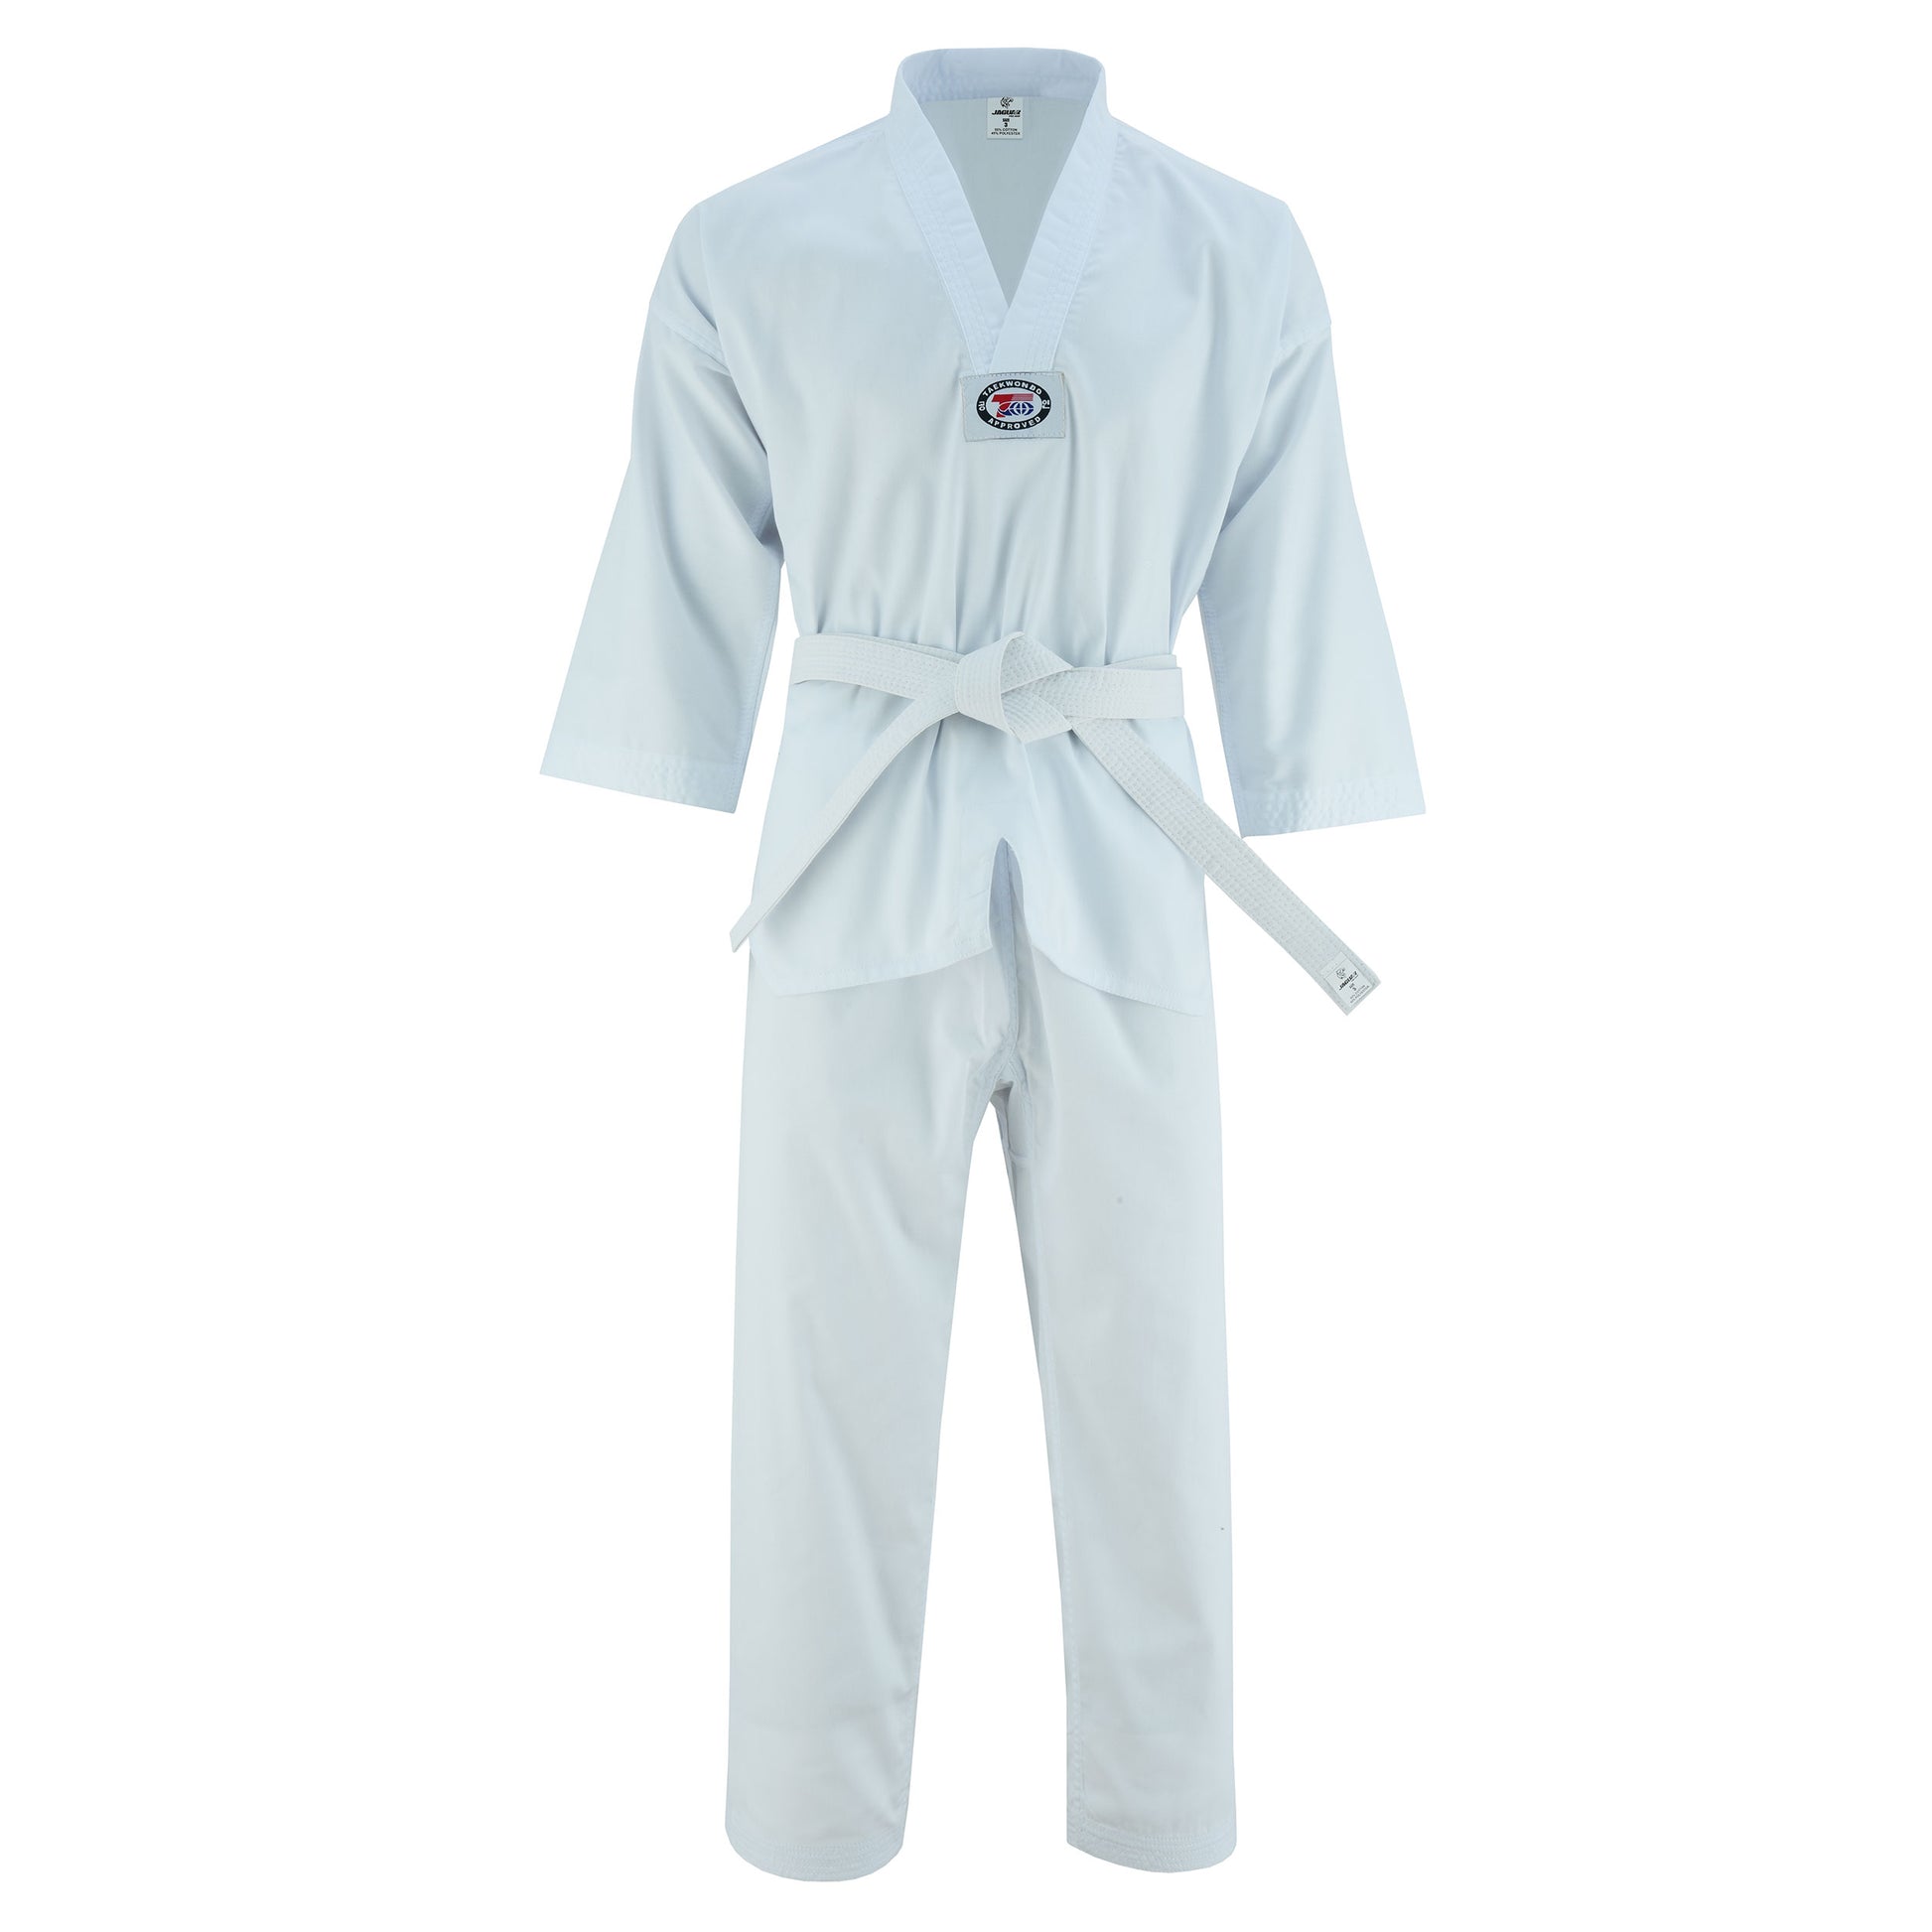 Pro Gear Taekwondo Uniform - Adults Unisex - Included)